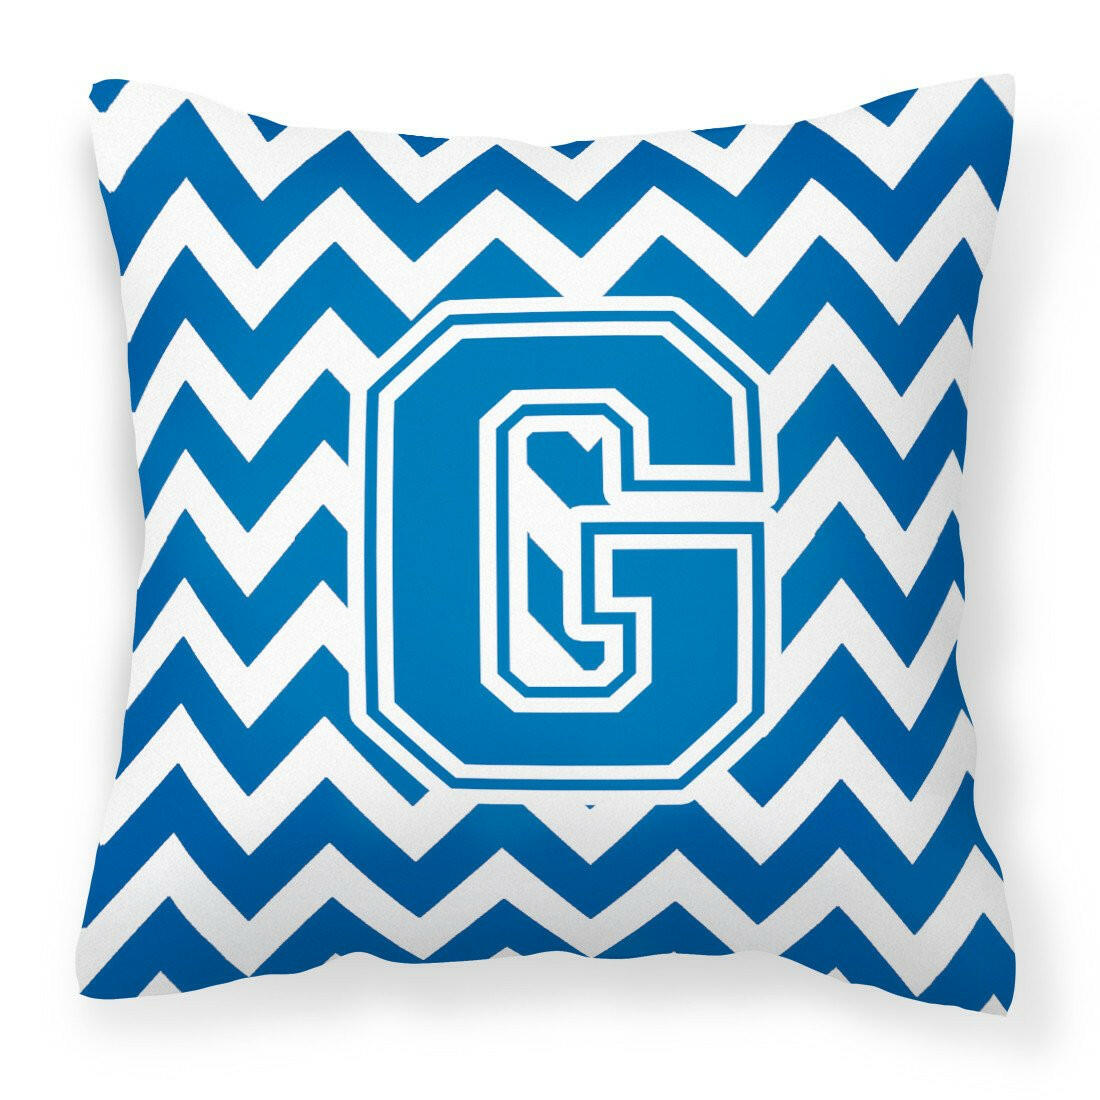 Letter G Chevron Blue and White Fabric Decorative Pillow CJ1056-GPW1414 by Caroline's Treasures